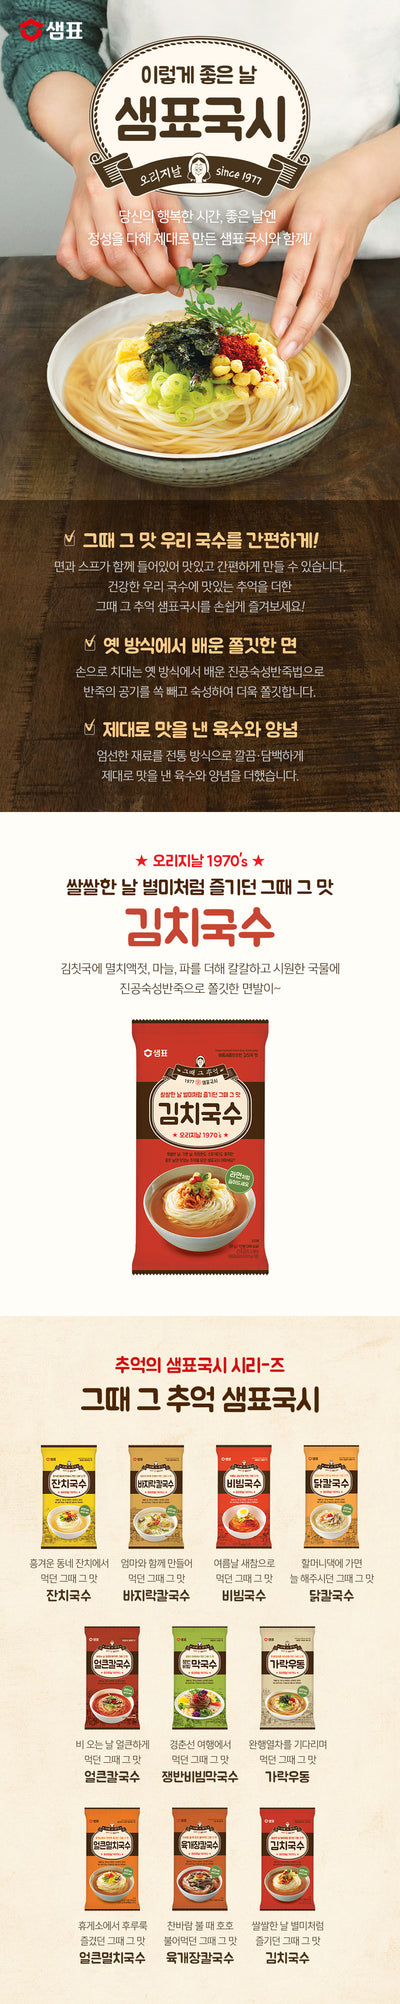 Sempio Kimchi Noodle 101g/샘표 김치국수 101g